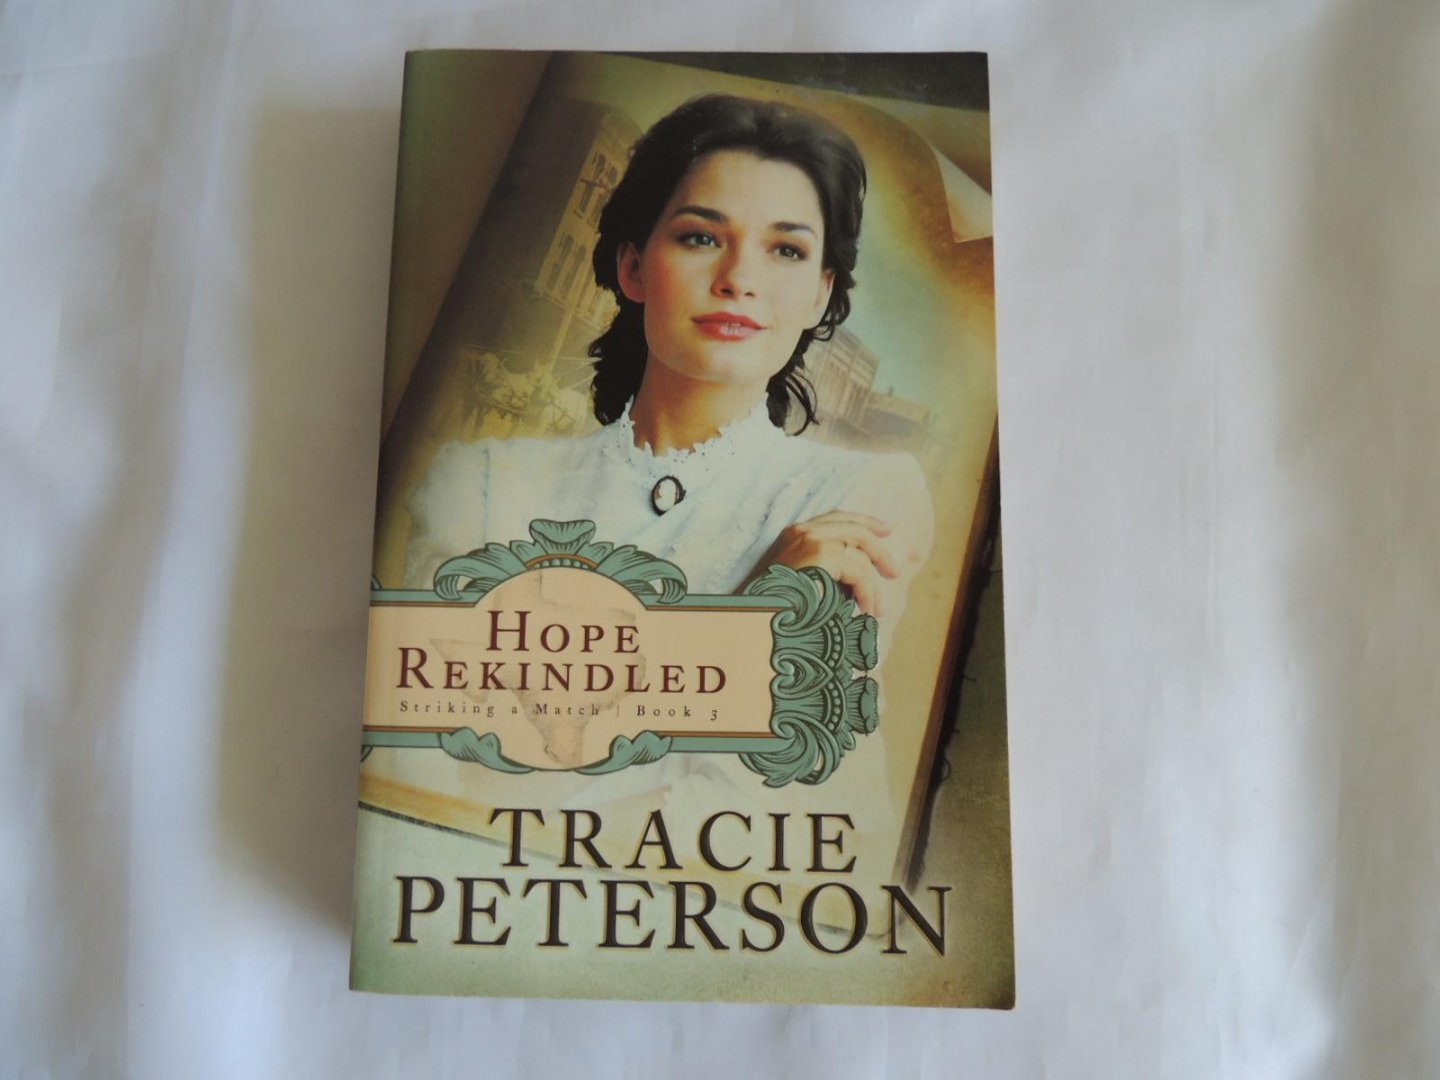 Tracie Peterson - Hope rekindled - Striking a Match  Book 3